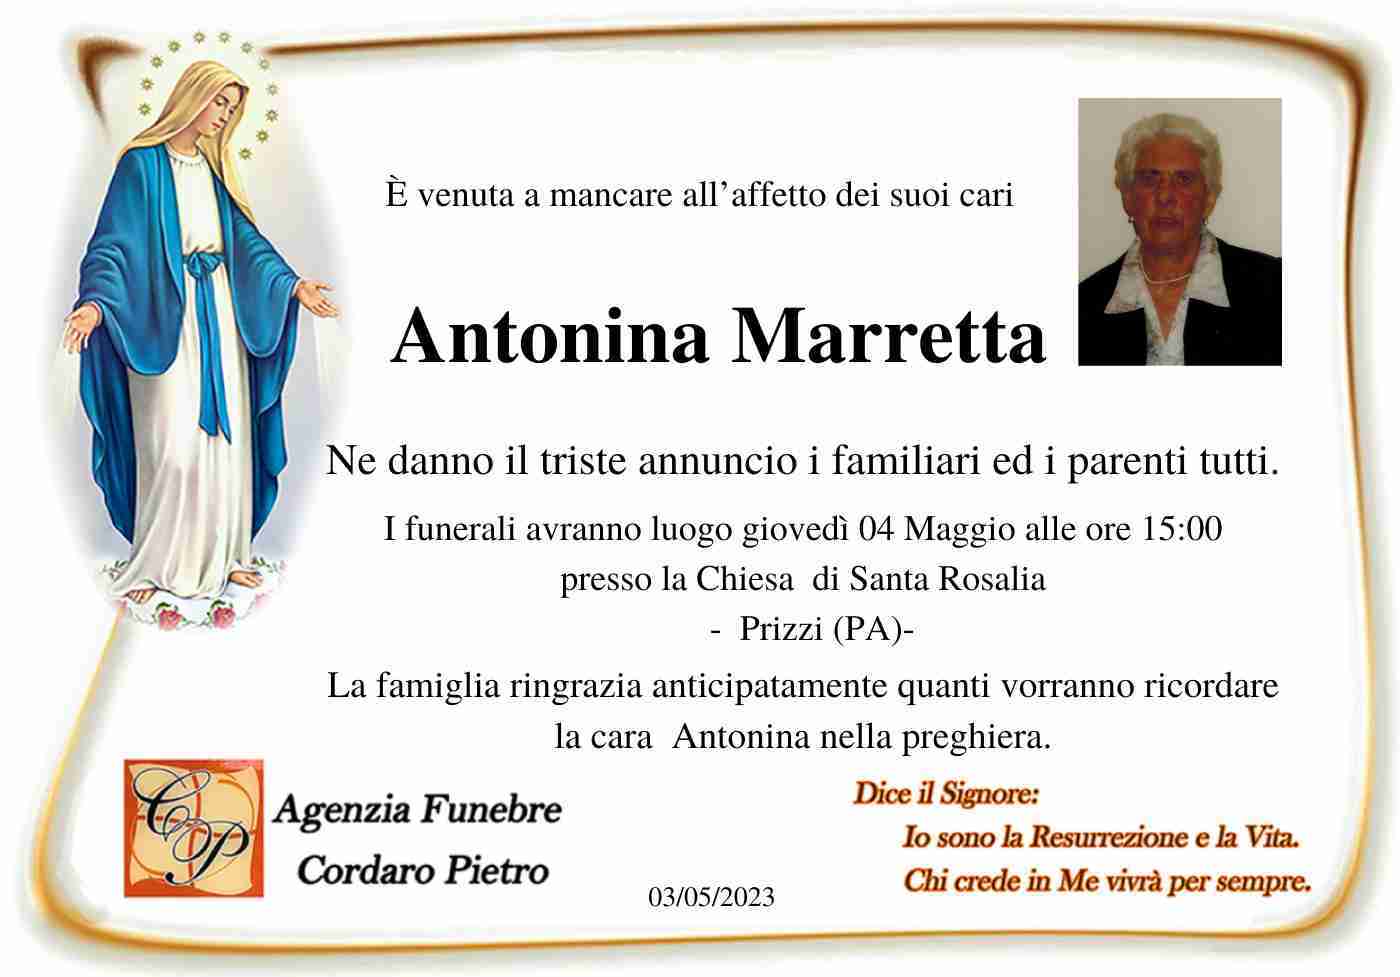 Antonina Marretta